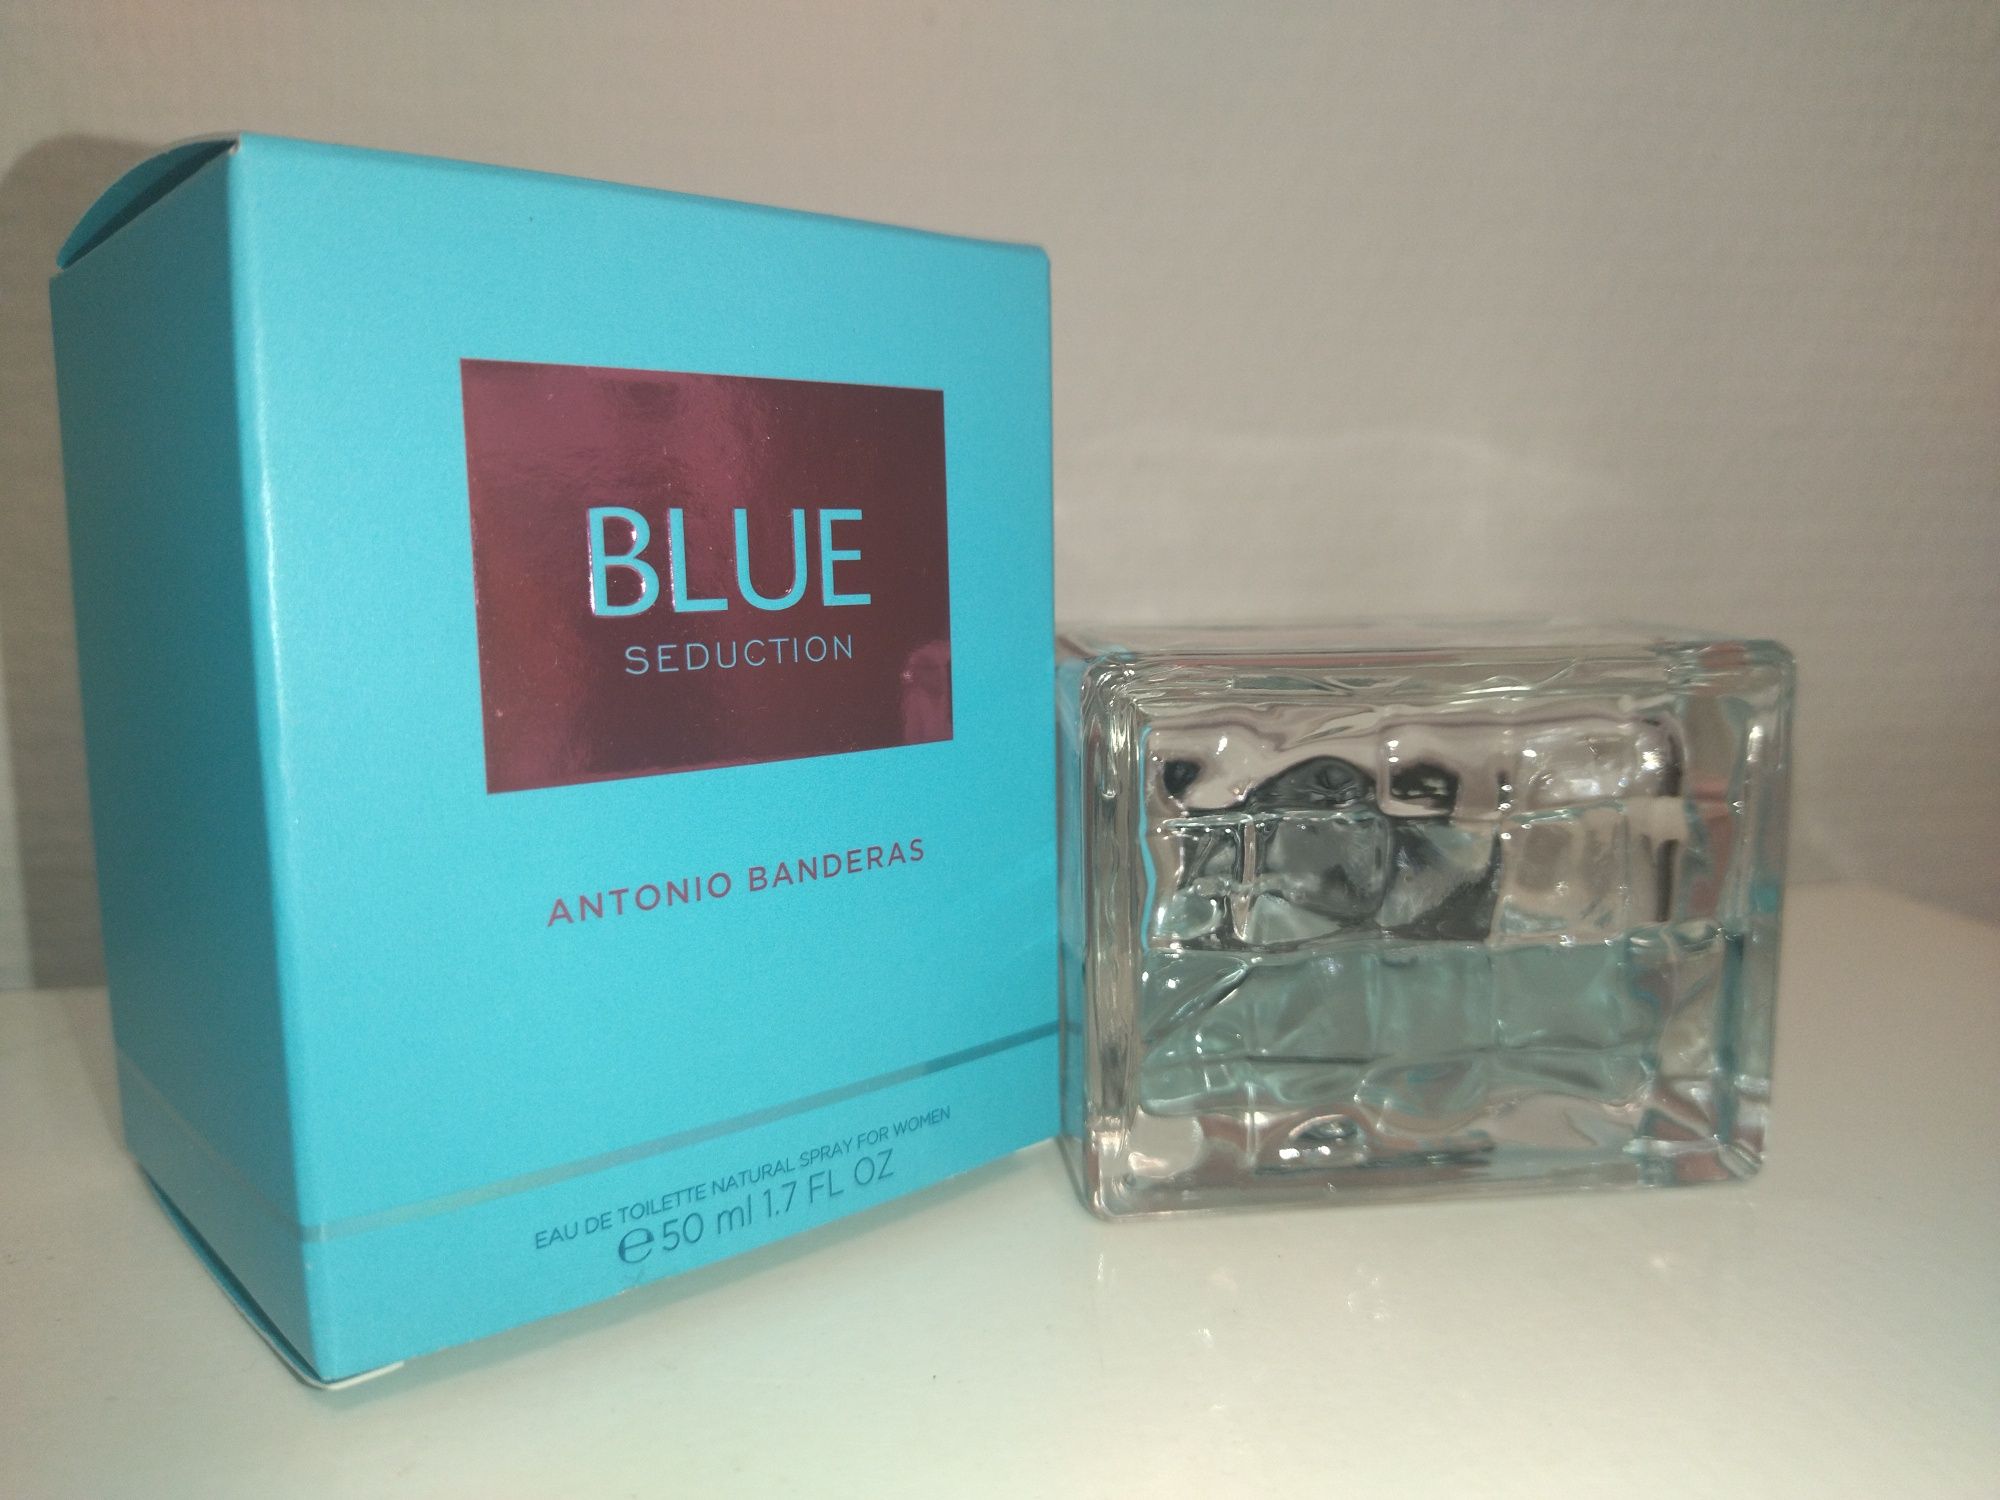 Blue Seduction Antonio Banderas

EDT - używane